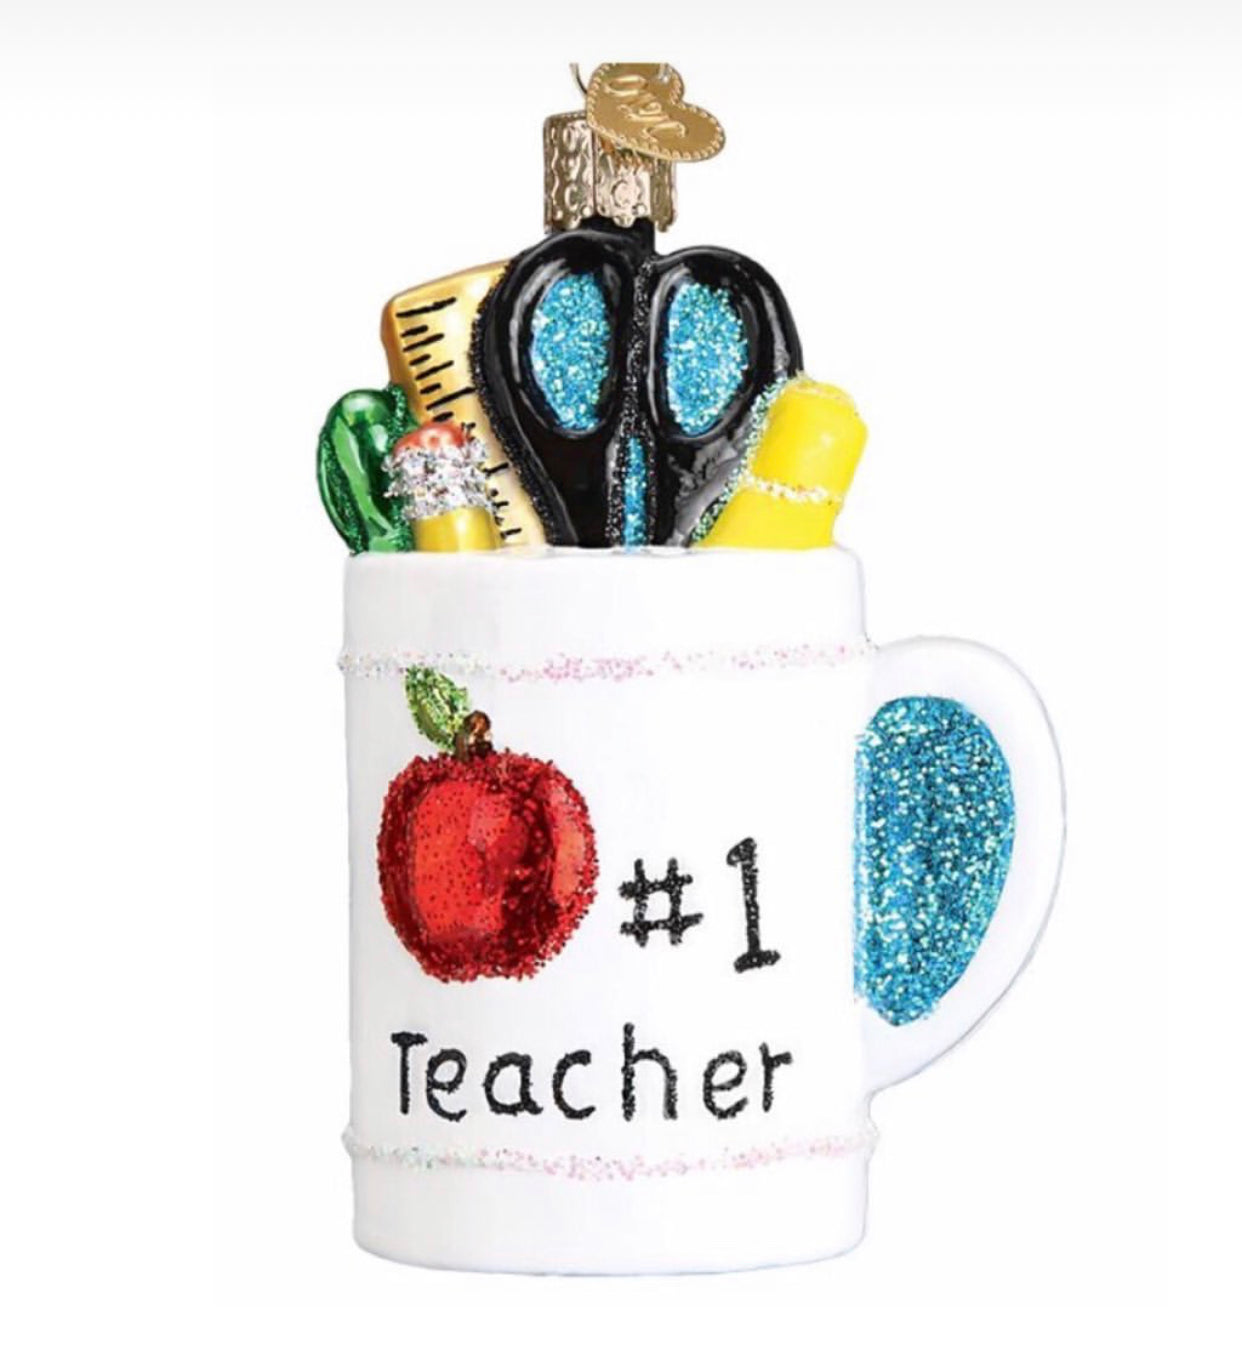 Five Fun Gifts for Teacher Appreciation Week